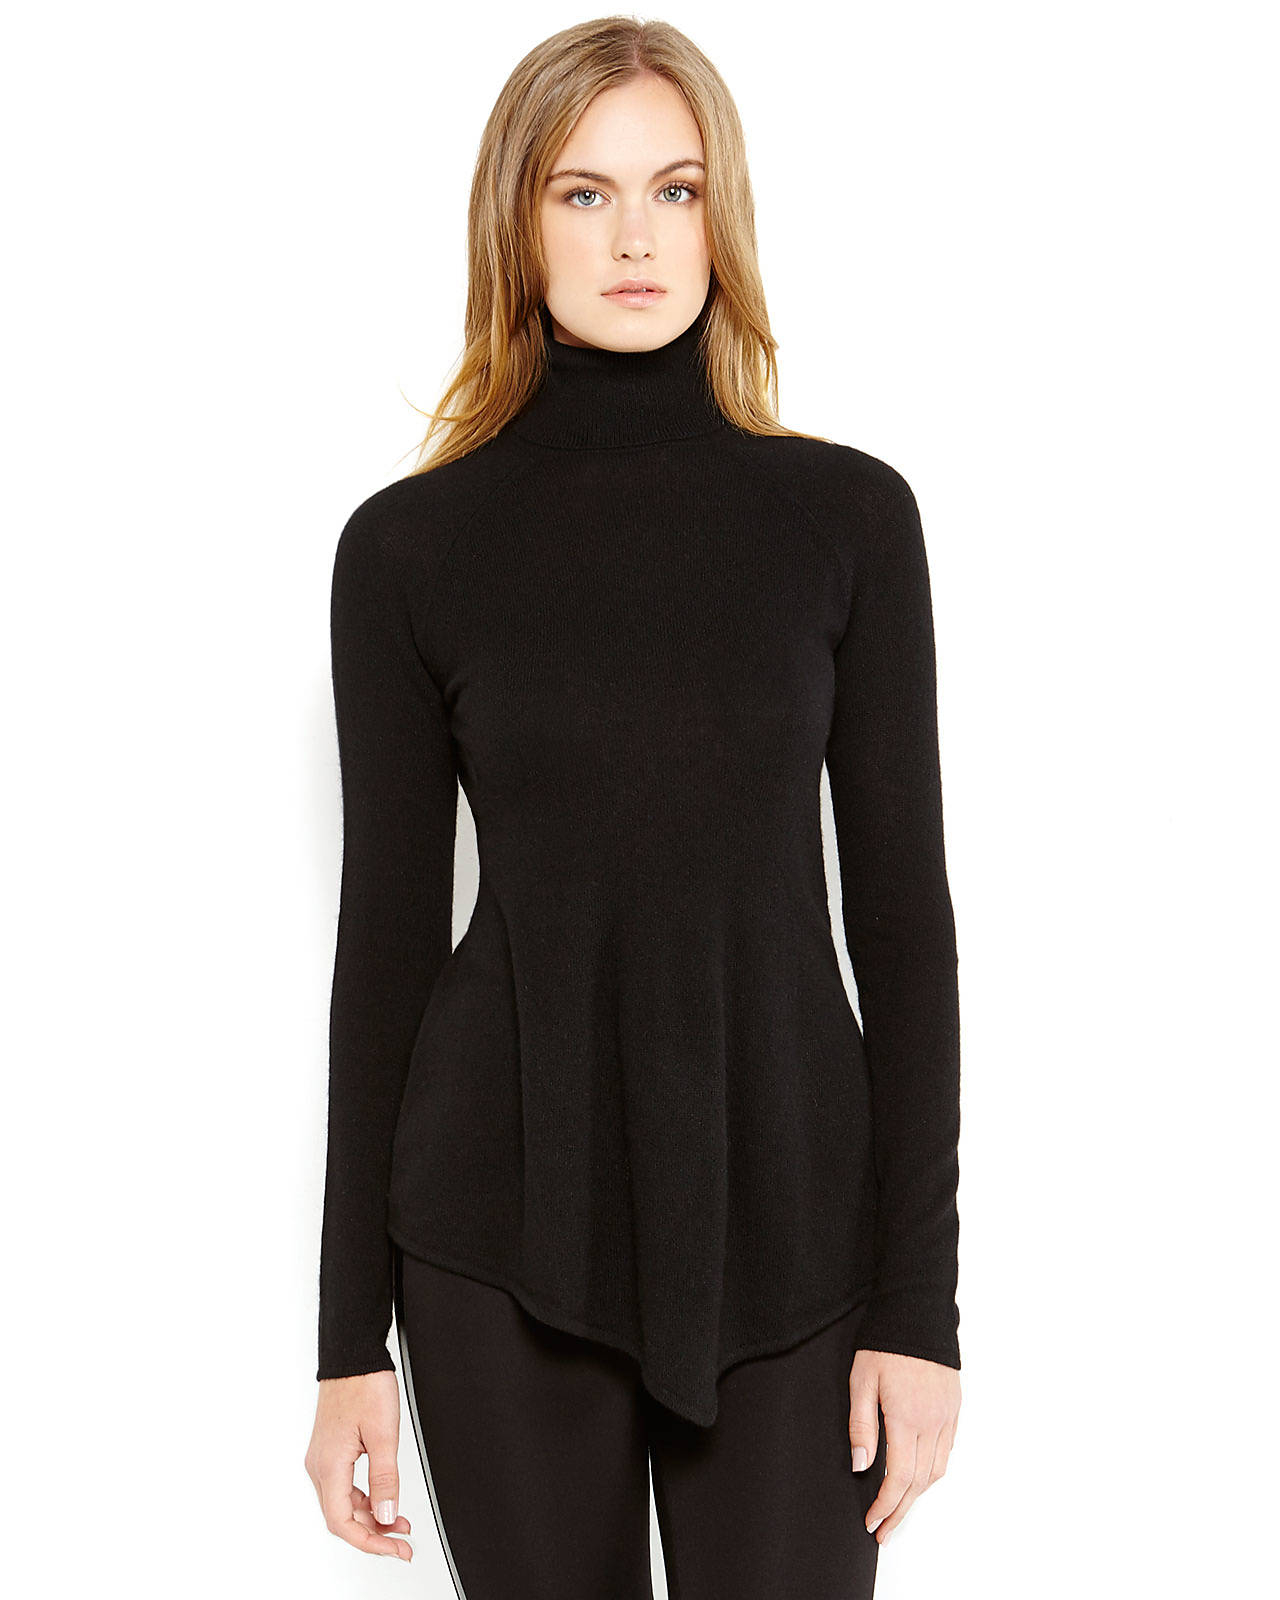 Sofia cashmere Turtleneck Sweater in Black | Lyst